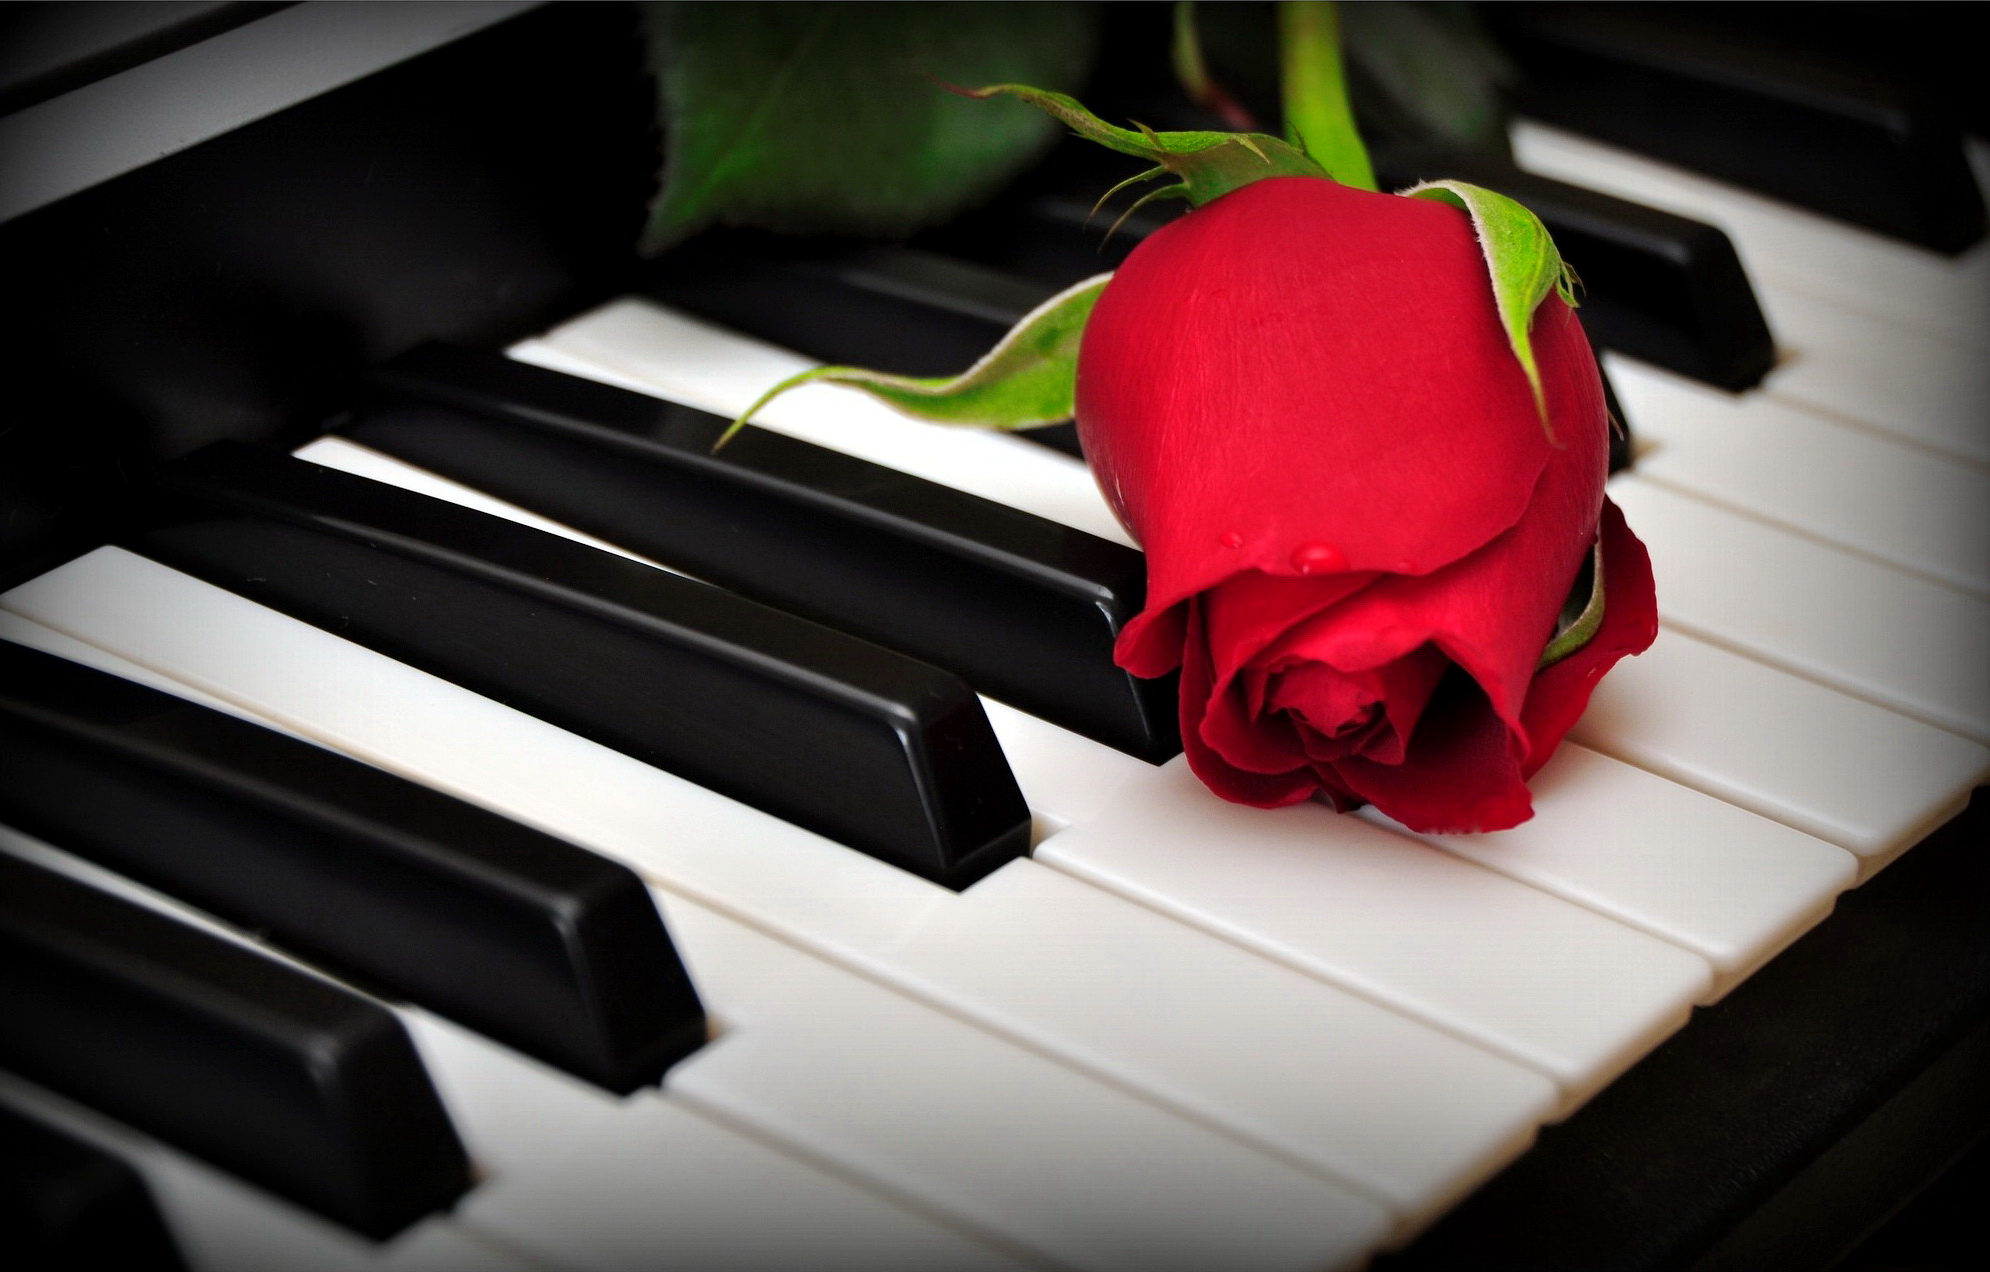 rose on the piano keys wallpaper   ForWallpapercom